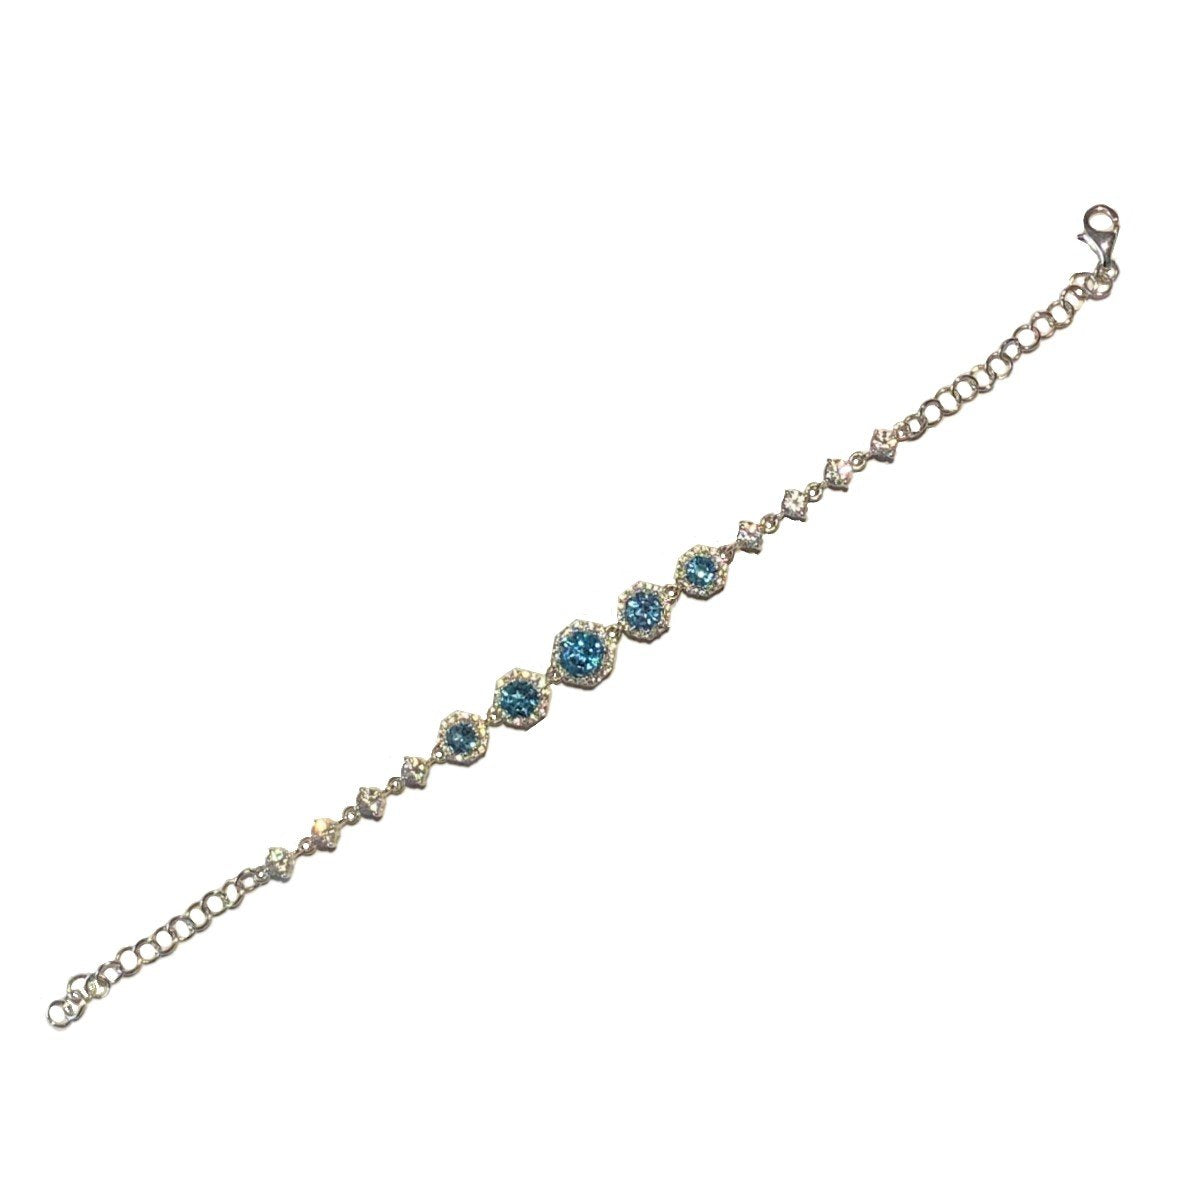 FARA Blue Topaz with White Zircon Halo Link Bracelet, Sterling Silver, Fine Jewelry for Women